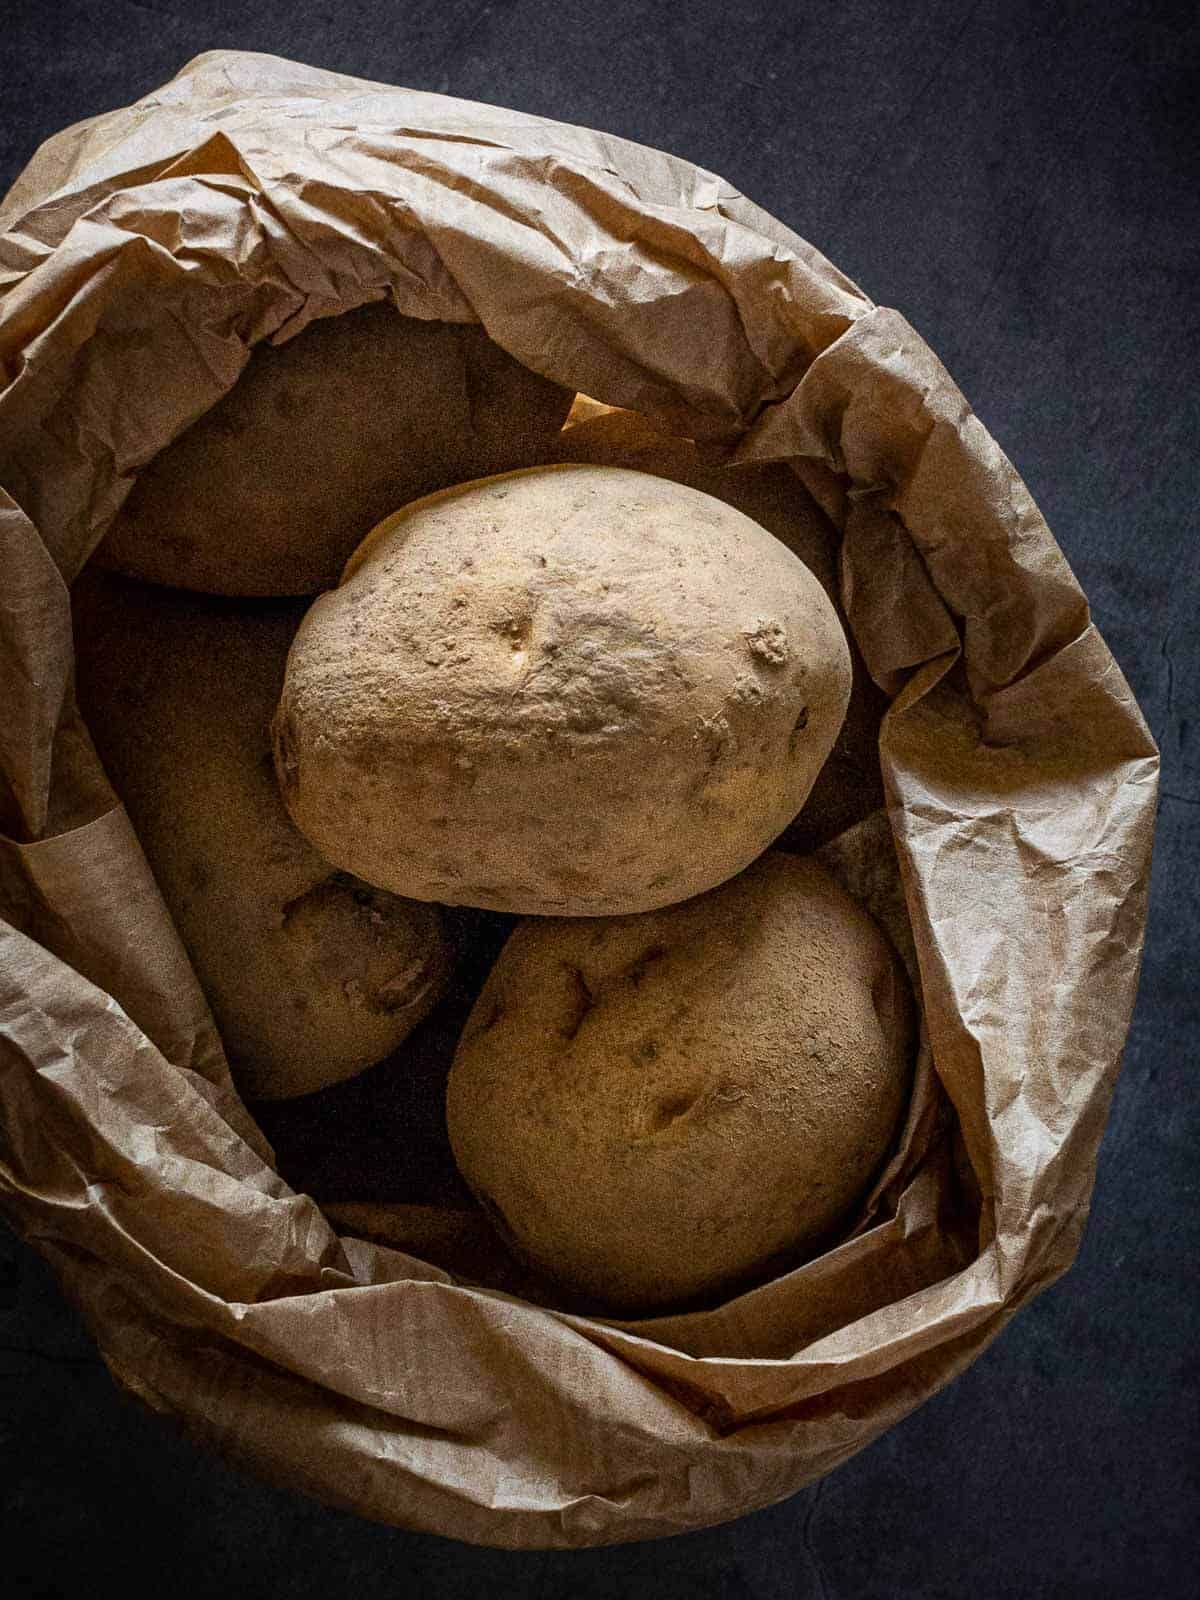 brown bag with potatoes.